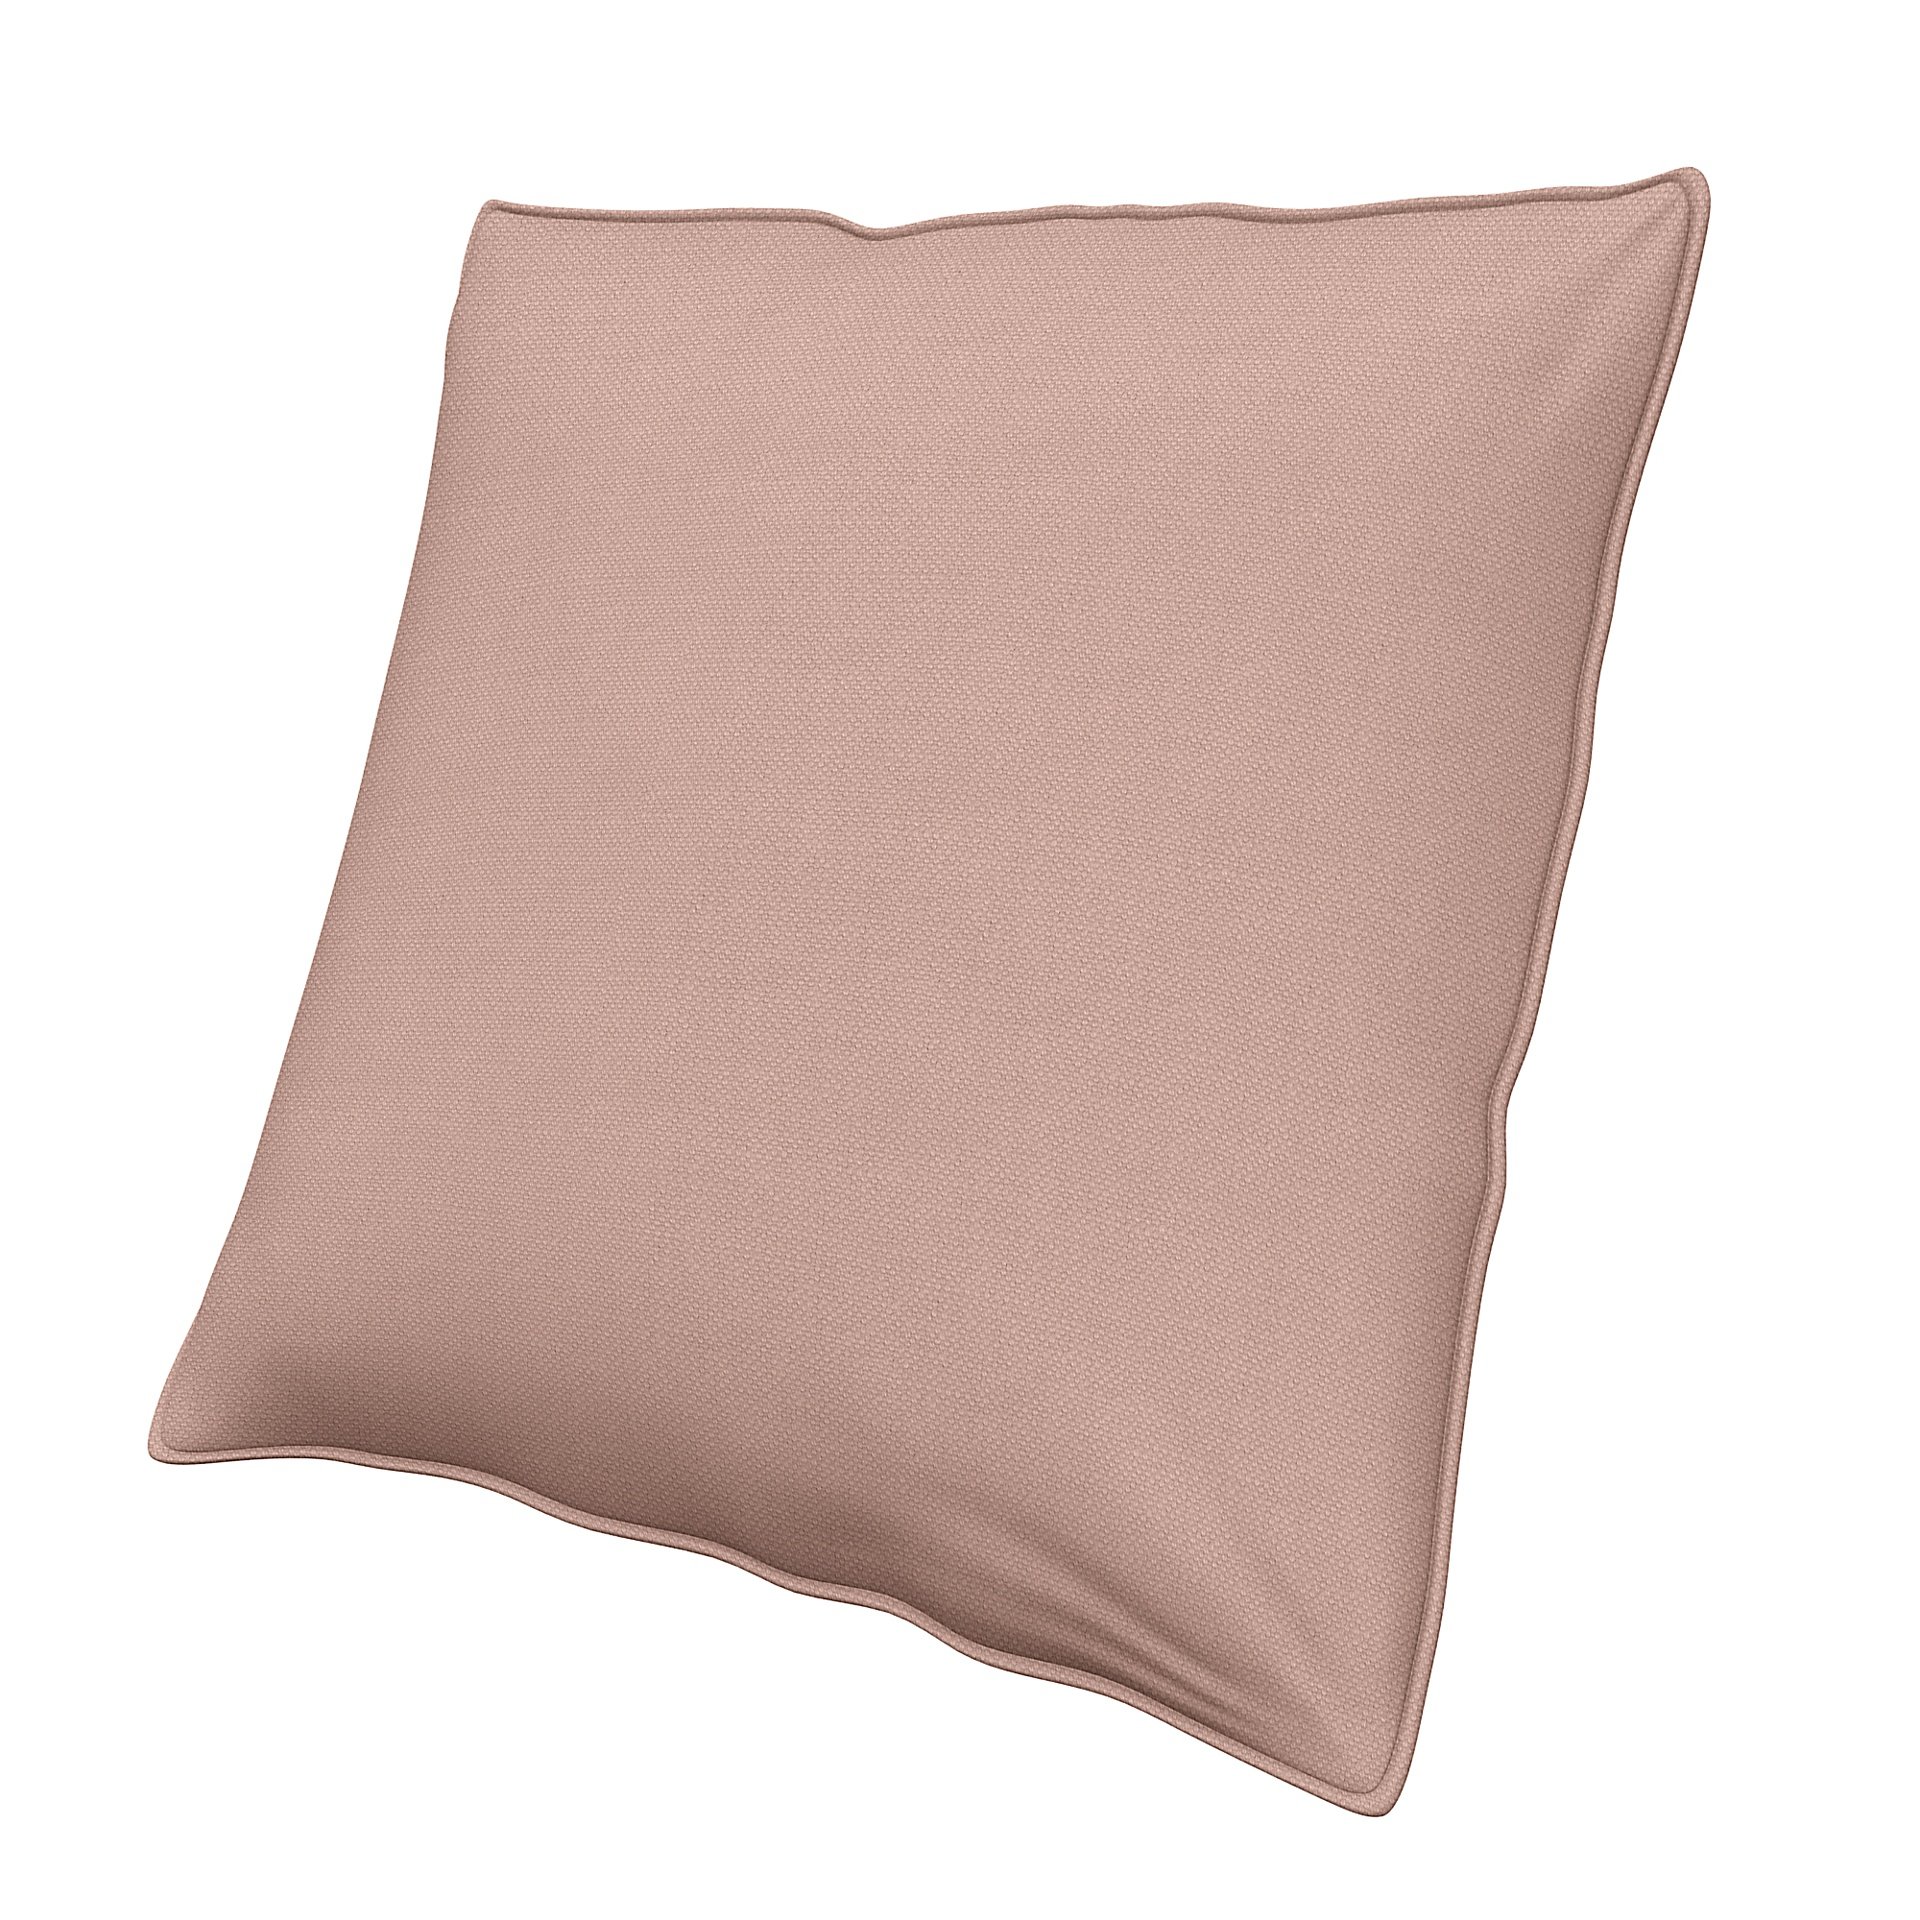 Cushion cover, Blush, Linen - Bemz